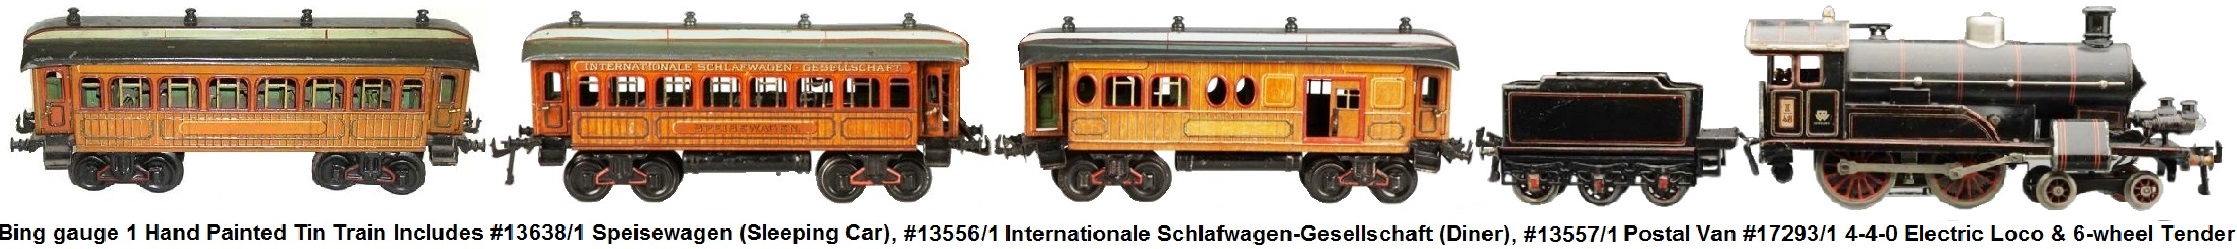 Bing Hand Painted Tin Train includes #17293/1 electric loco & tender, #13557/1 Postal/baggage van, #13638/1 Speisewagen Sleeper Pullman, and #13556/1 Internationale Schlafwagen-Gesellschaft diner, gauge 1